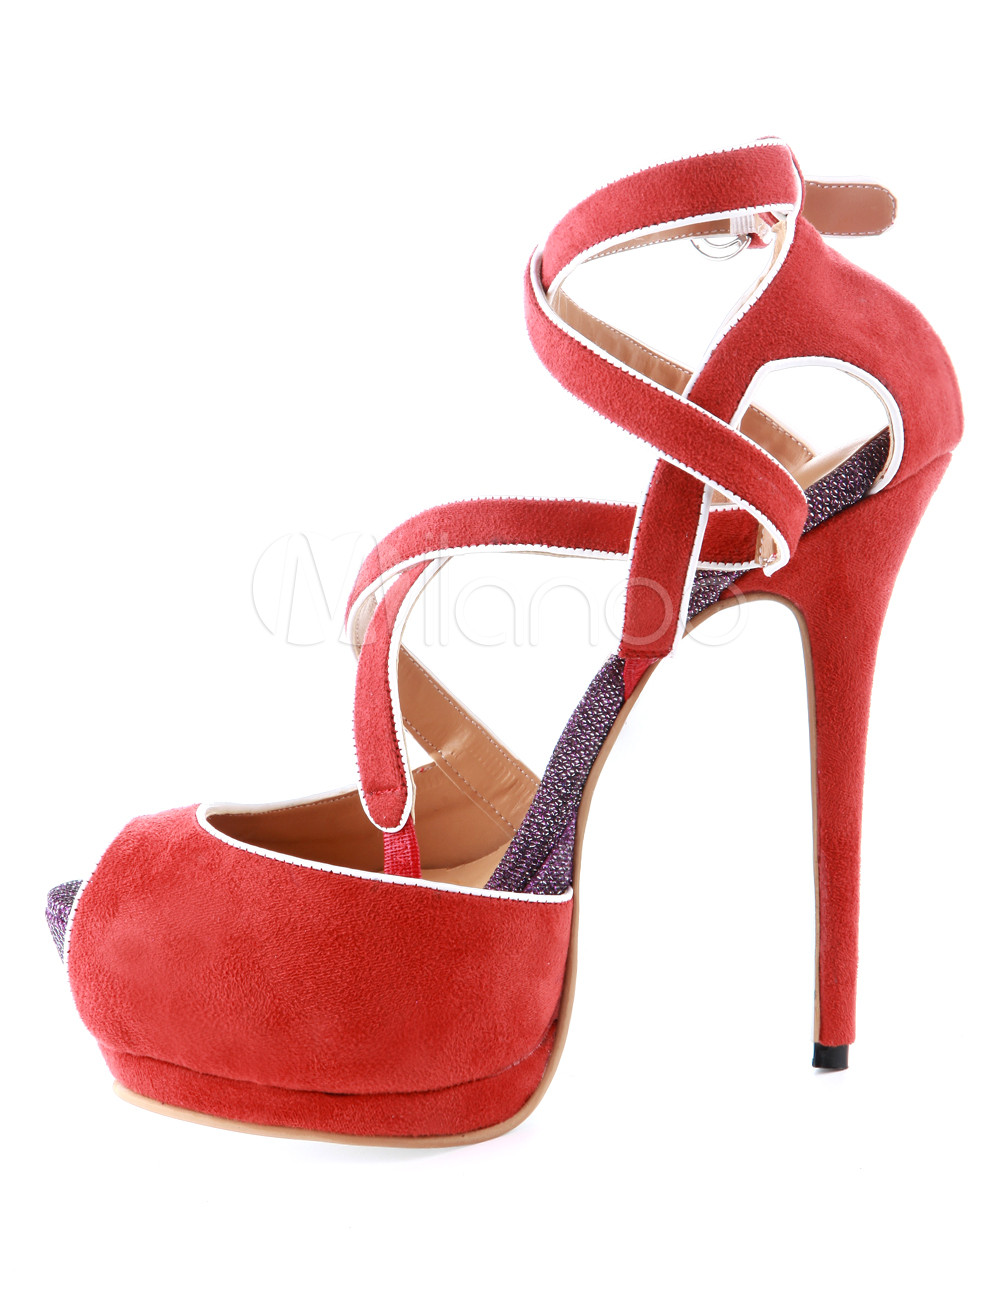 Sexy Red Peep Toe Sheepskin Suede Strappy Gladiator Sandals - Milanoo.com